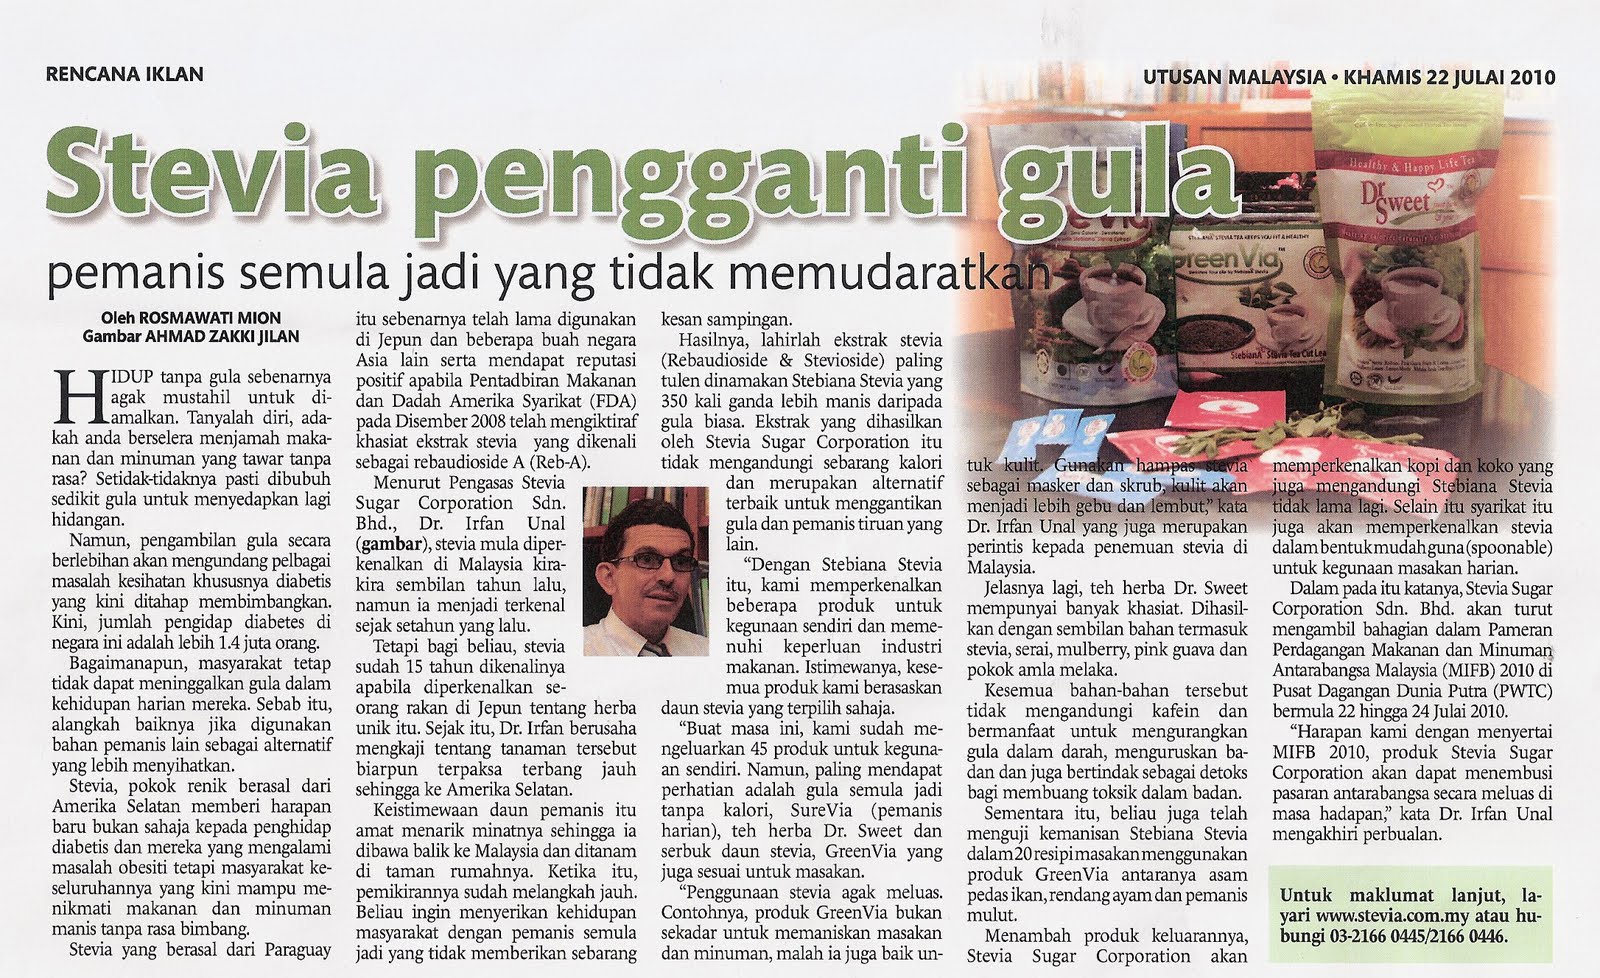  ... Sweet: SteviaSugar CEO, Dr. Irfan Unal in Utusan Malaysia News Article